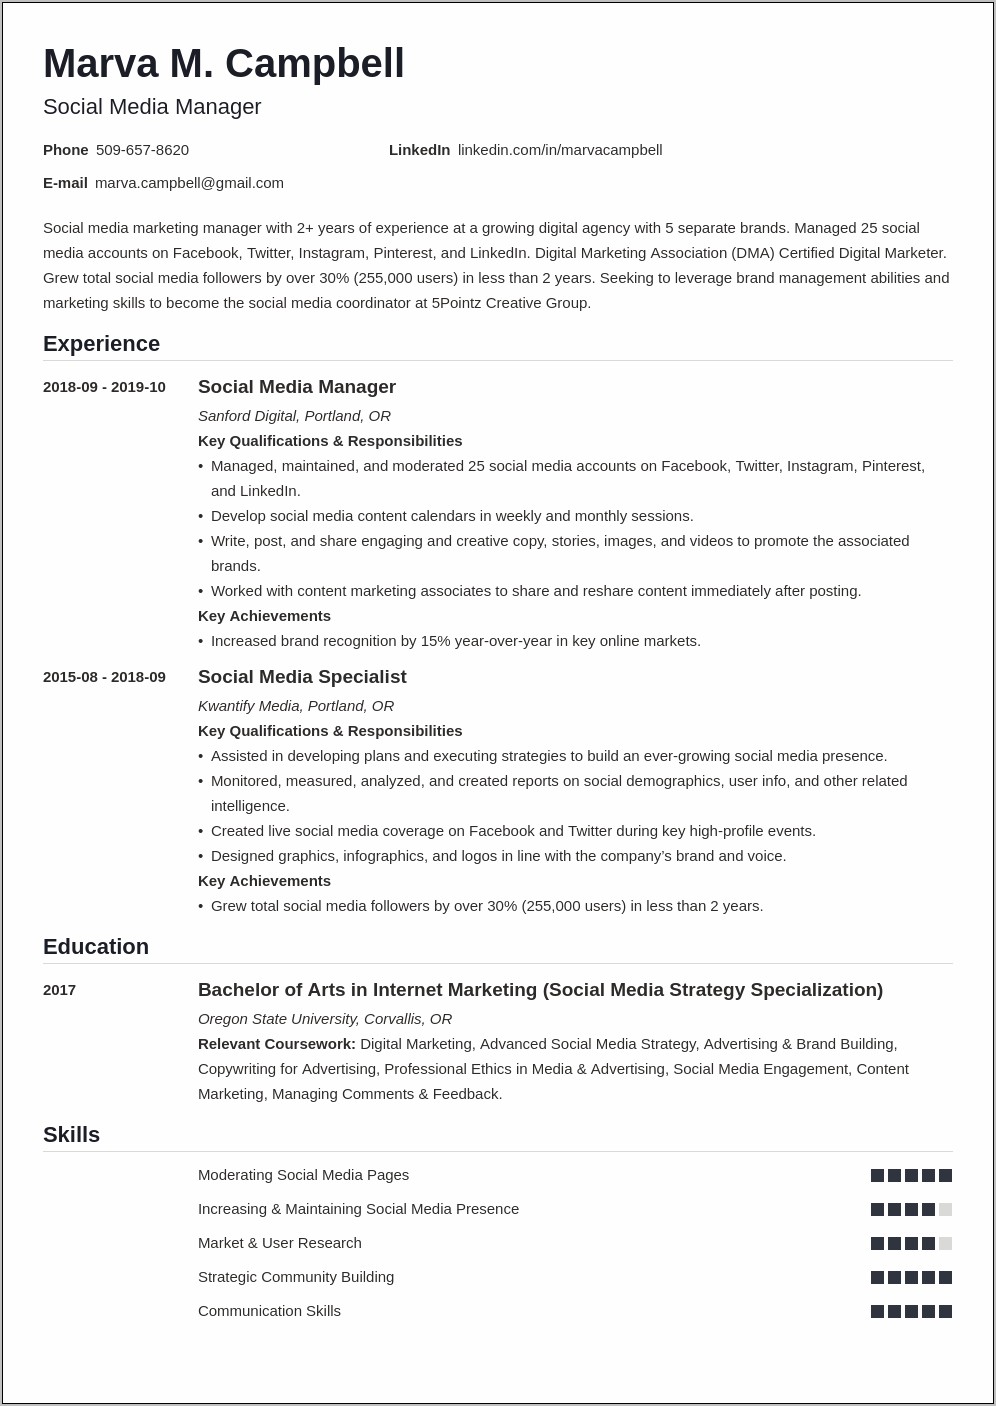 Sample Resume With Social Media Skills